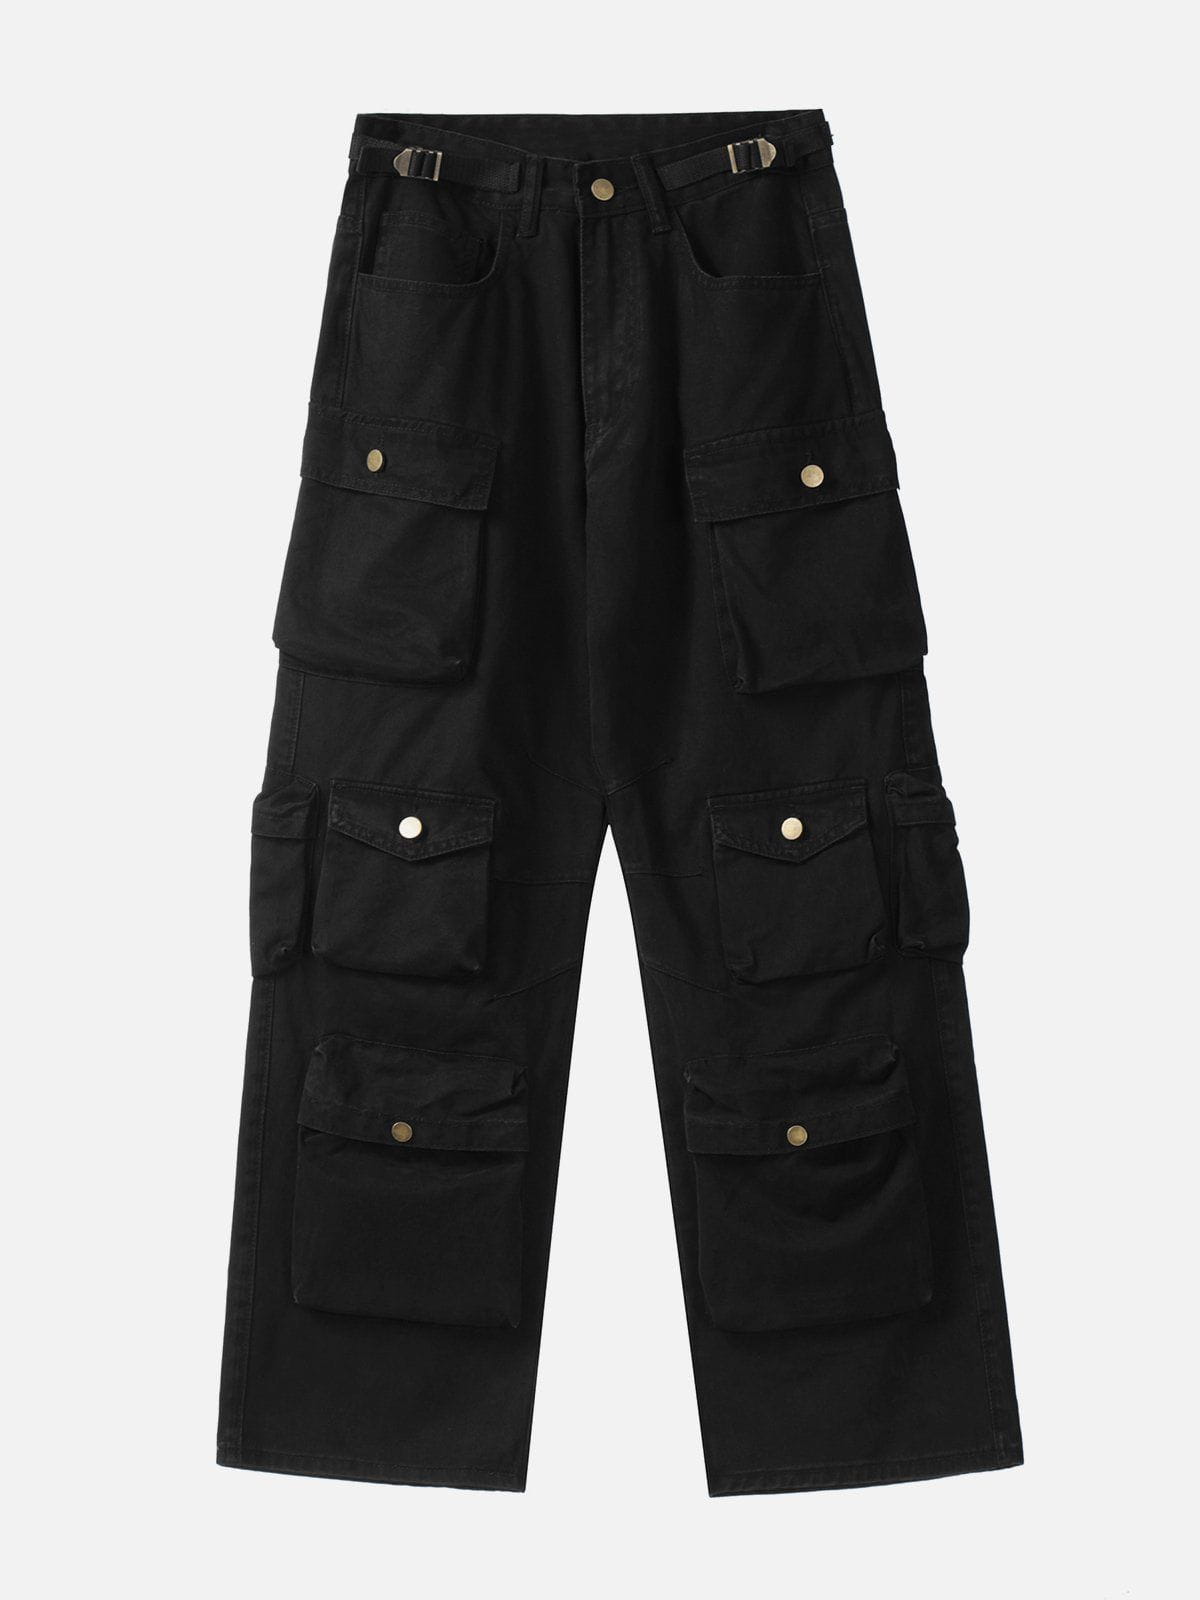 FUHONGCUP Corduroy Cargo Pants Casual Multi-Pocket Vintage